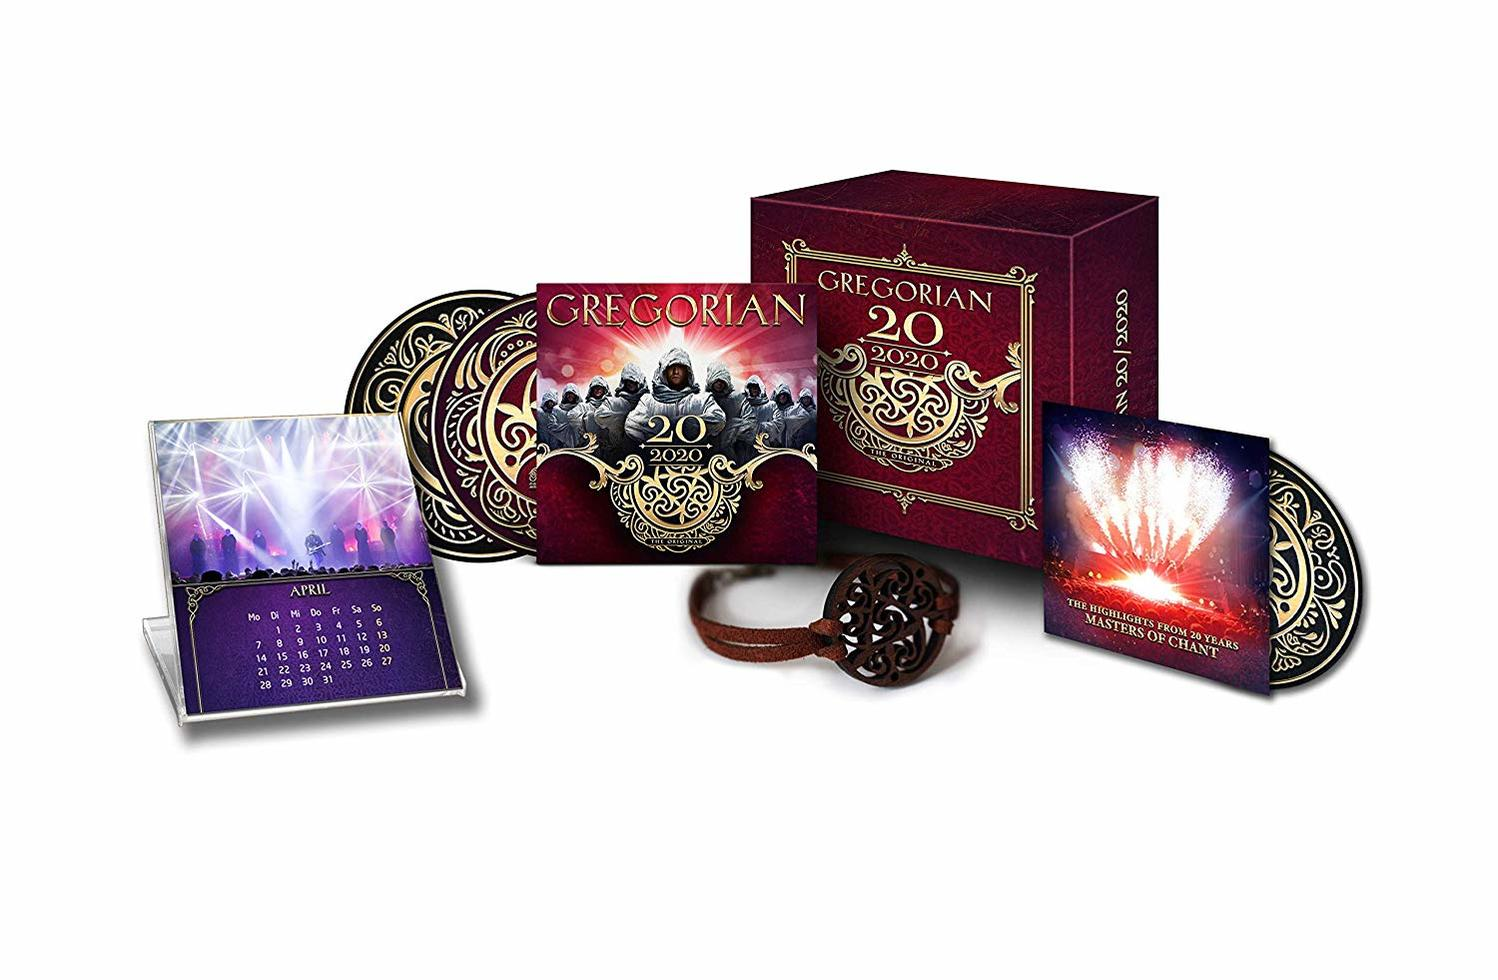 Gregorian - 20/2020 (CD DVD + Box - Video) Set) (Limited